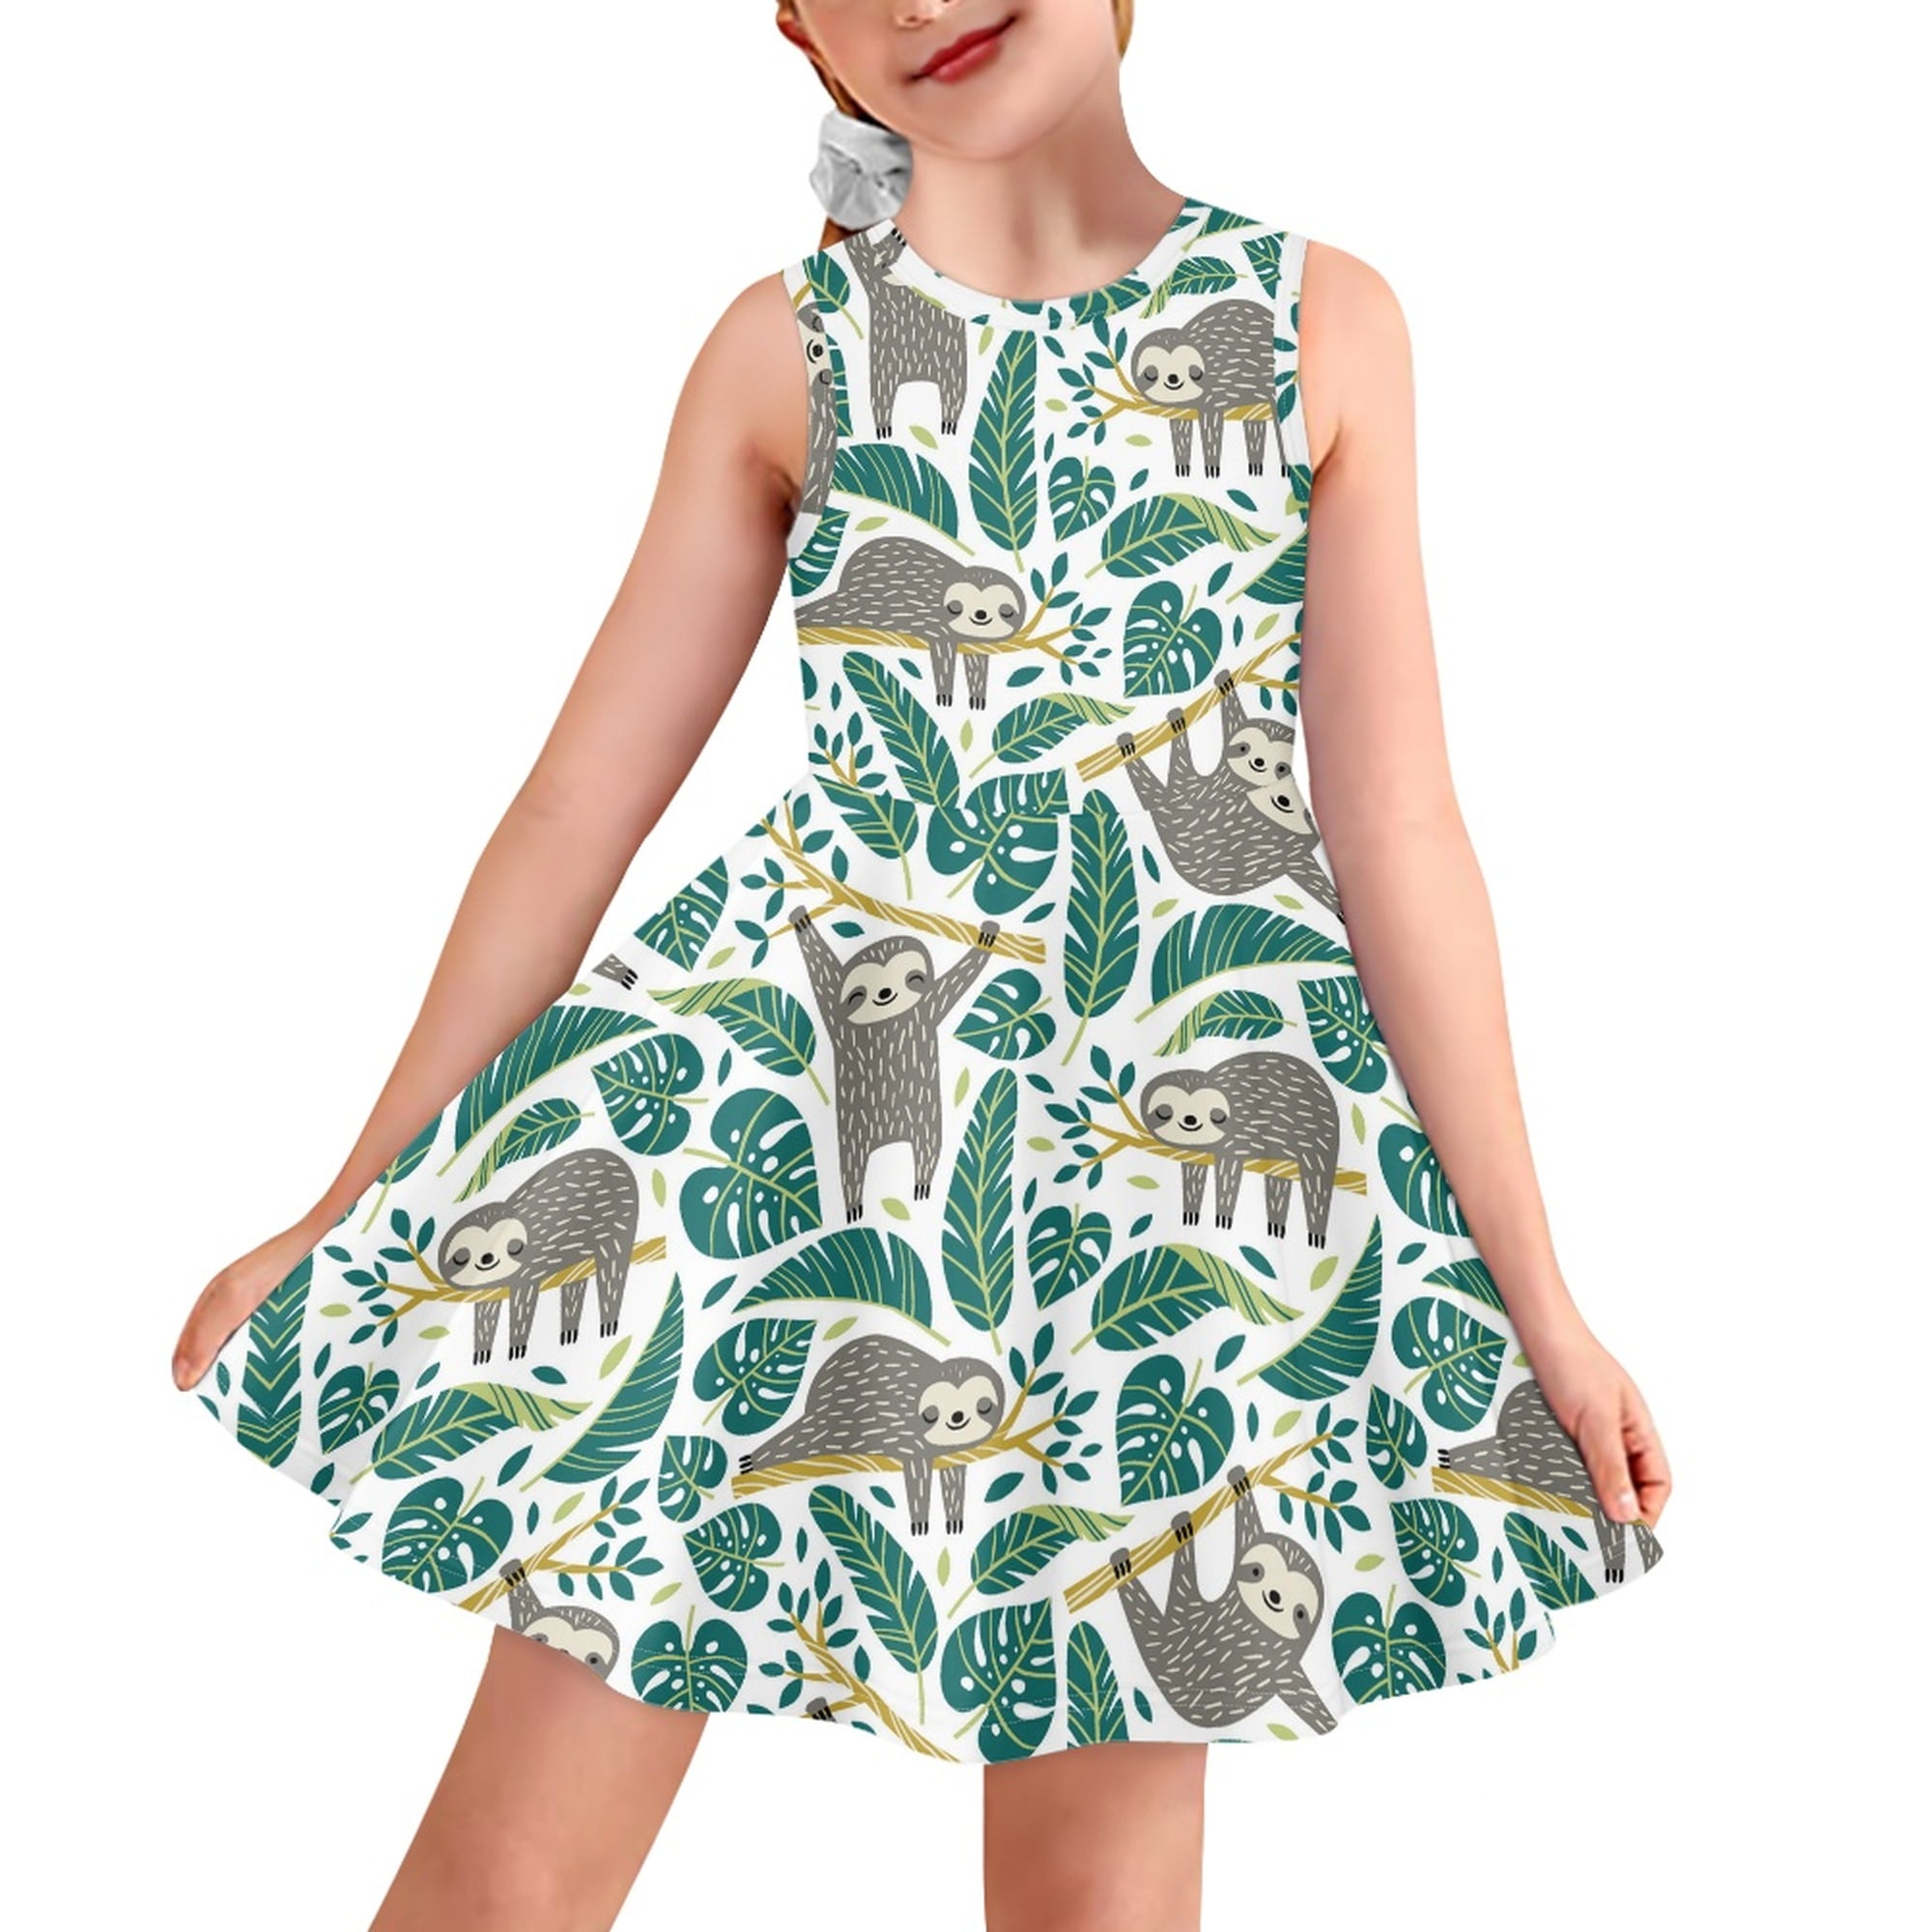  Cartoon Hockey Player Girl's Dress Sleeveless Crewneck Casual  Midi Dress Cute Swing Sundress : Sports & Outdoors